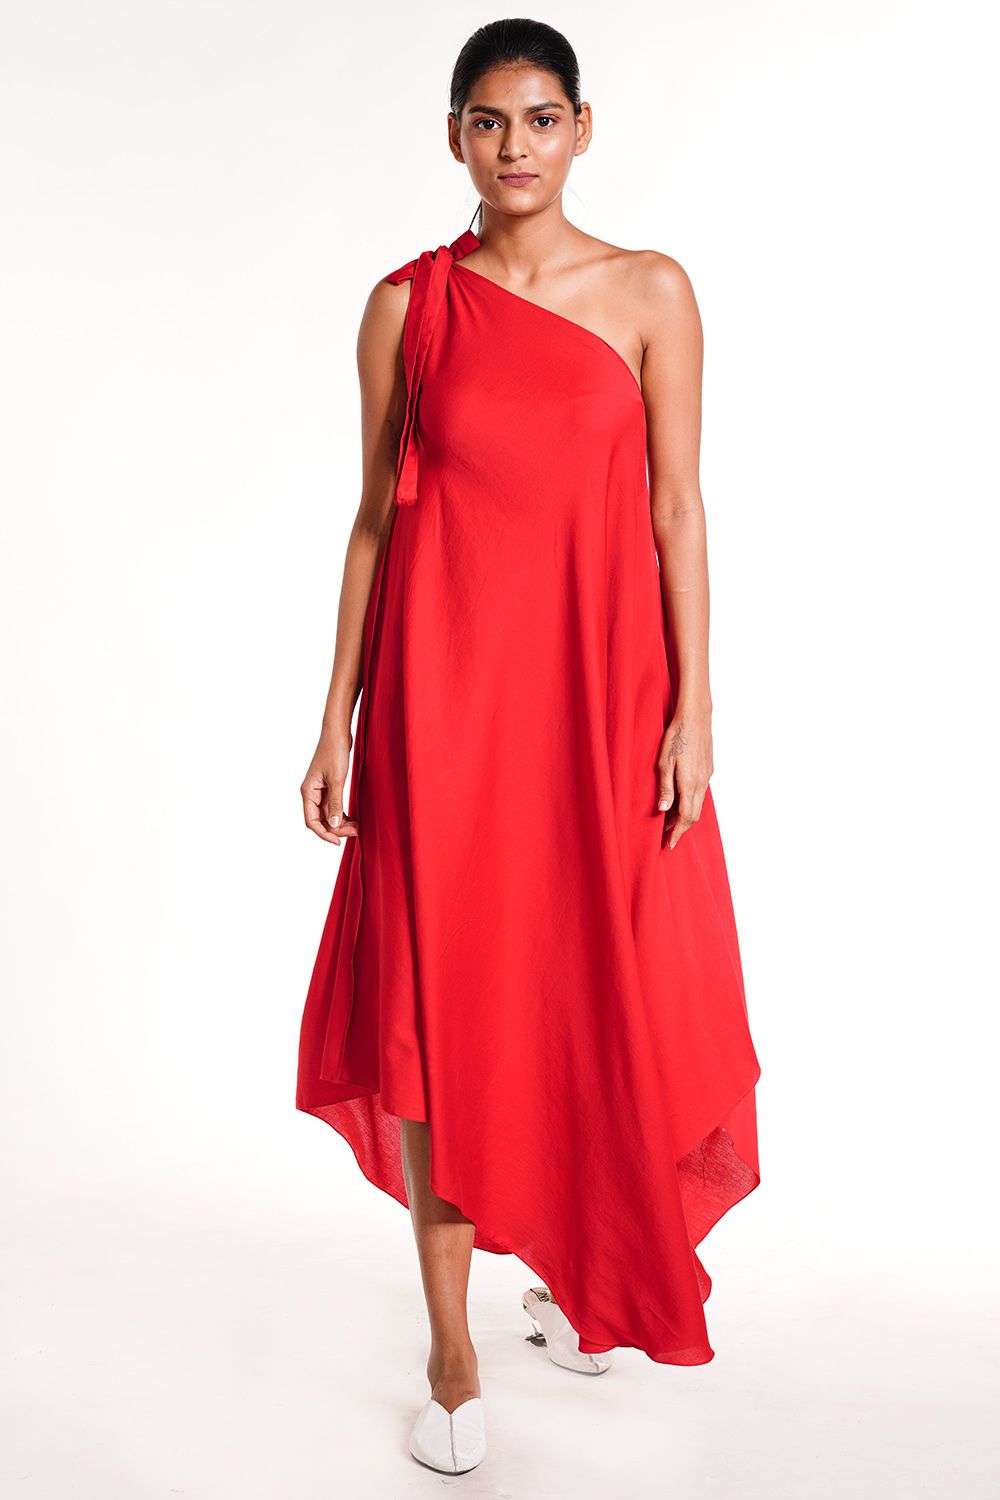 One Shoulder Dress Gowns - Buy One Shoulder Dress Gowns Online at Best  Prices In India | Flipkart.com